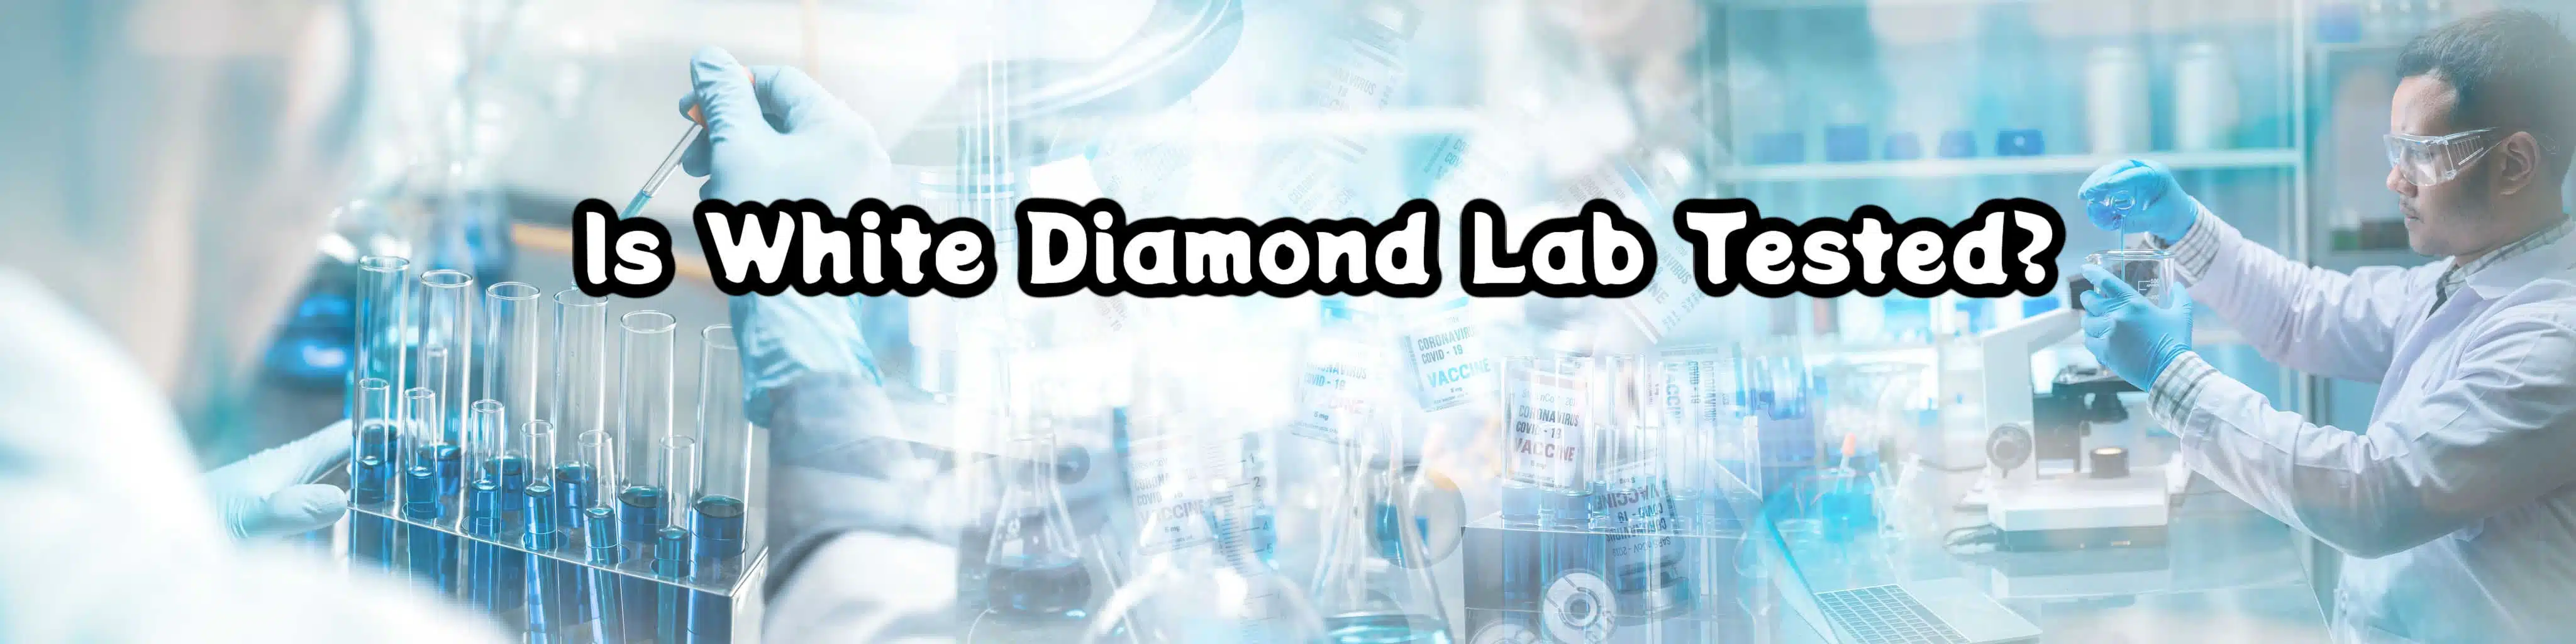 image of is white diamond kratom lab tested